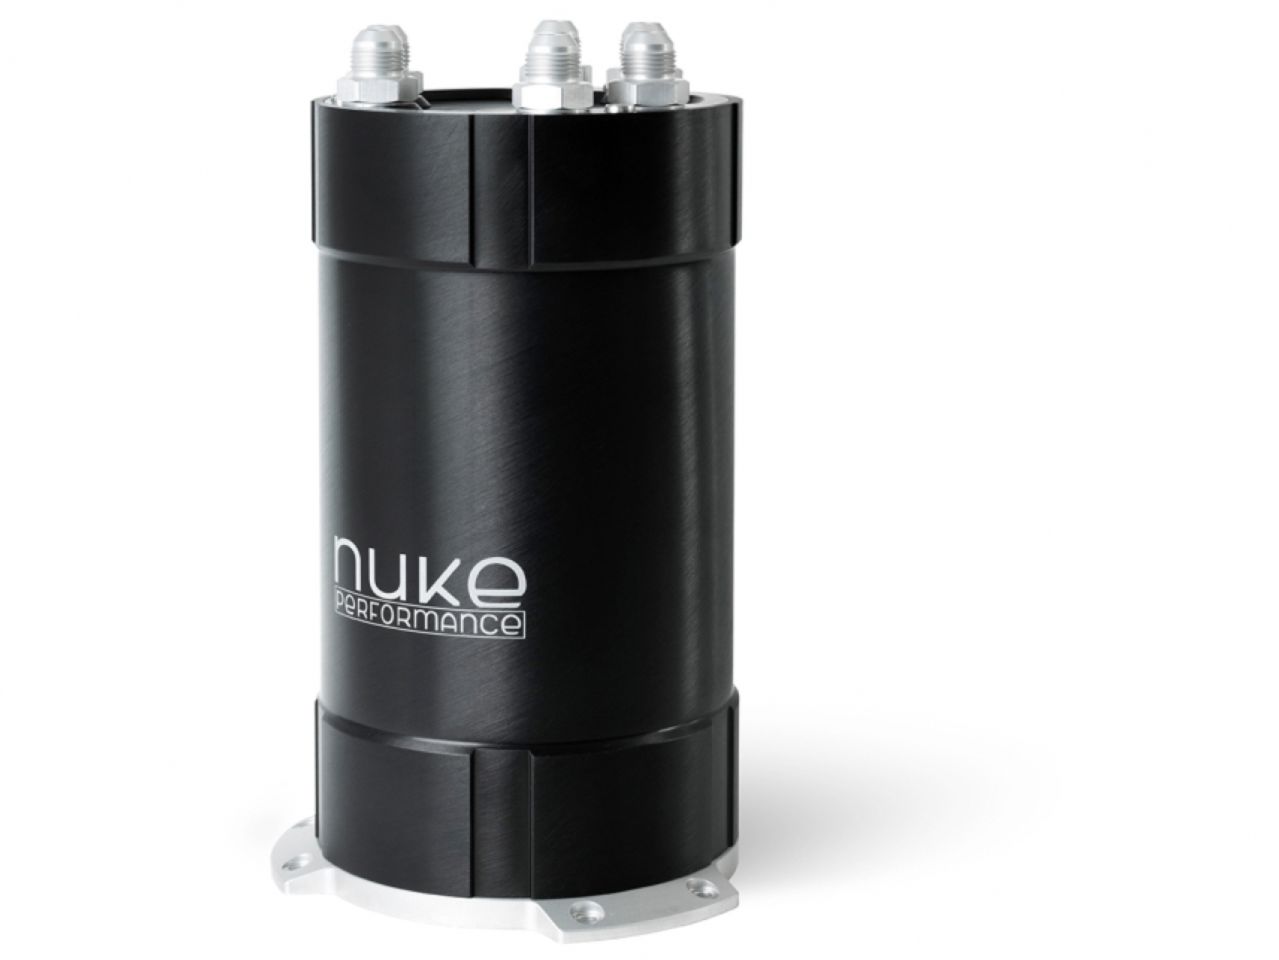 Nuke Performance 2G Fuel Surge Tank 3.0 Liter Up To 3 Internal DW400 Fuel Pumps